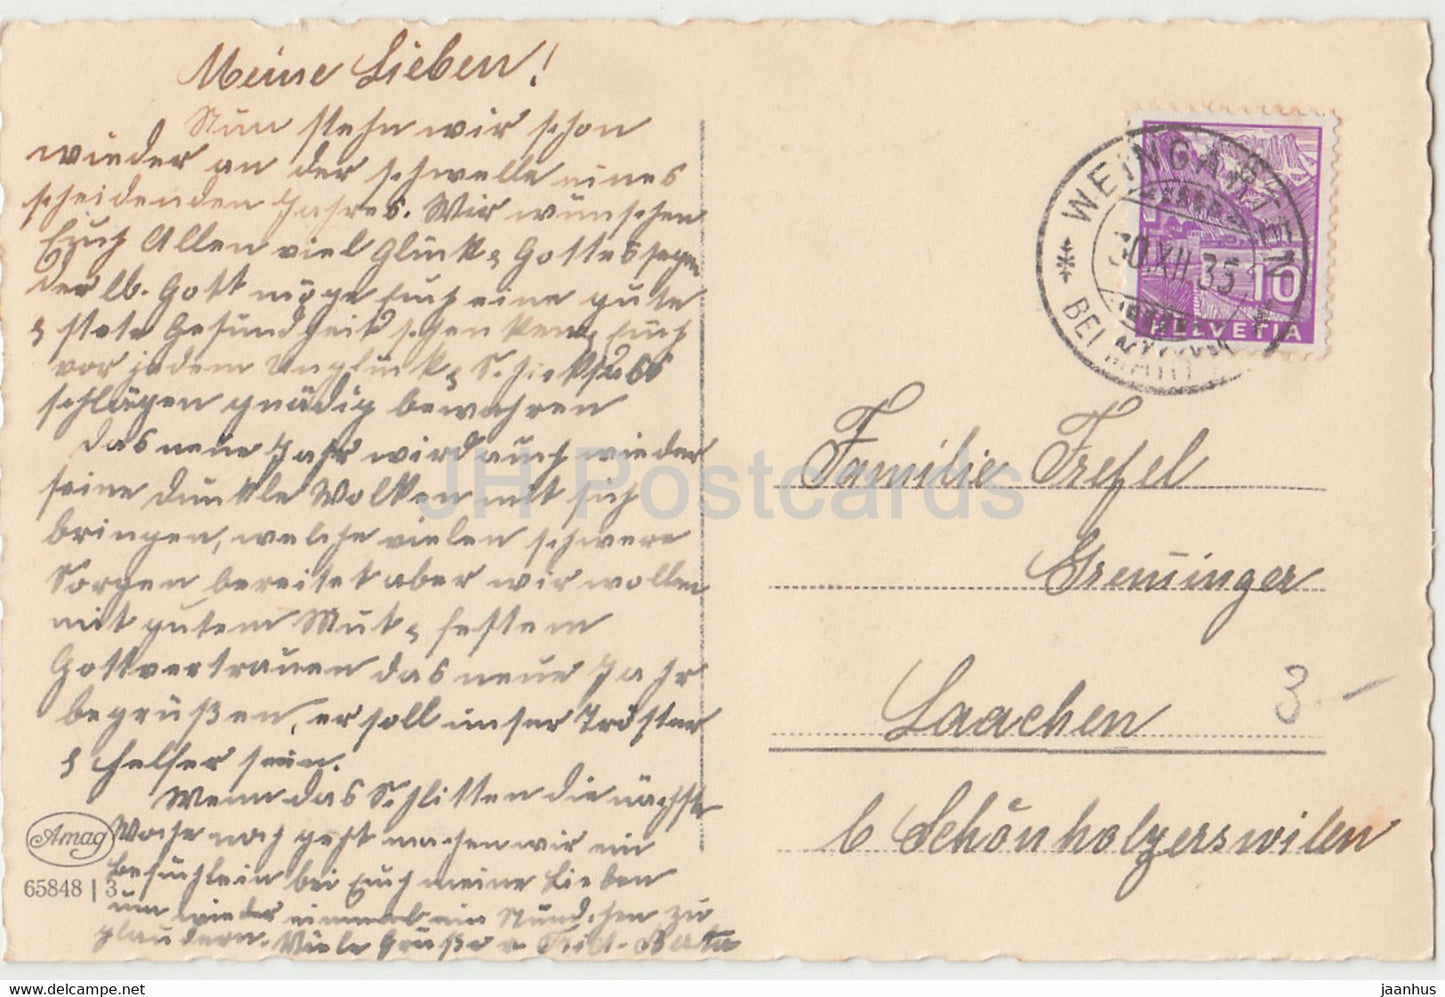 Carte de vœux du Nouvel An - Herzlichen Gluckwunsch zum Neuen Jahre - cerf - Amag 65848 carte postale ancienne - 1935 - Allemagne - utilisé